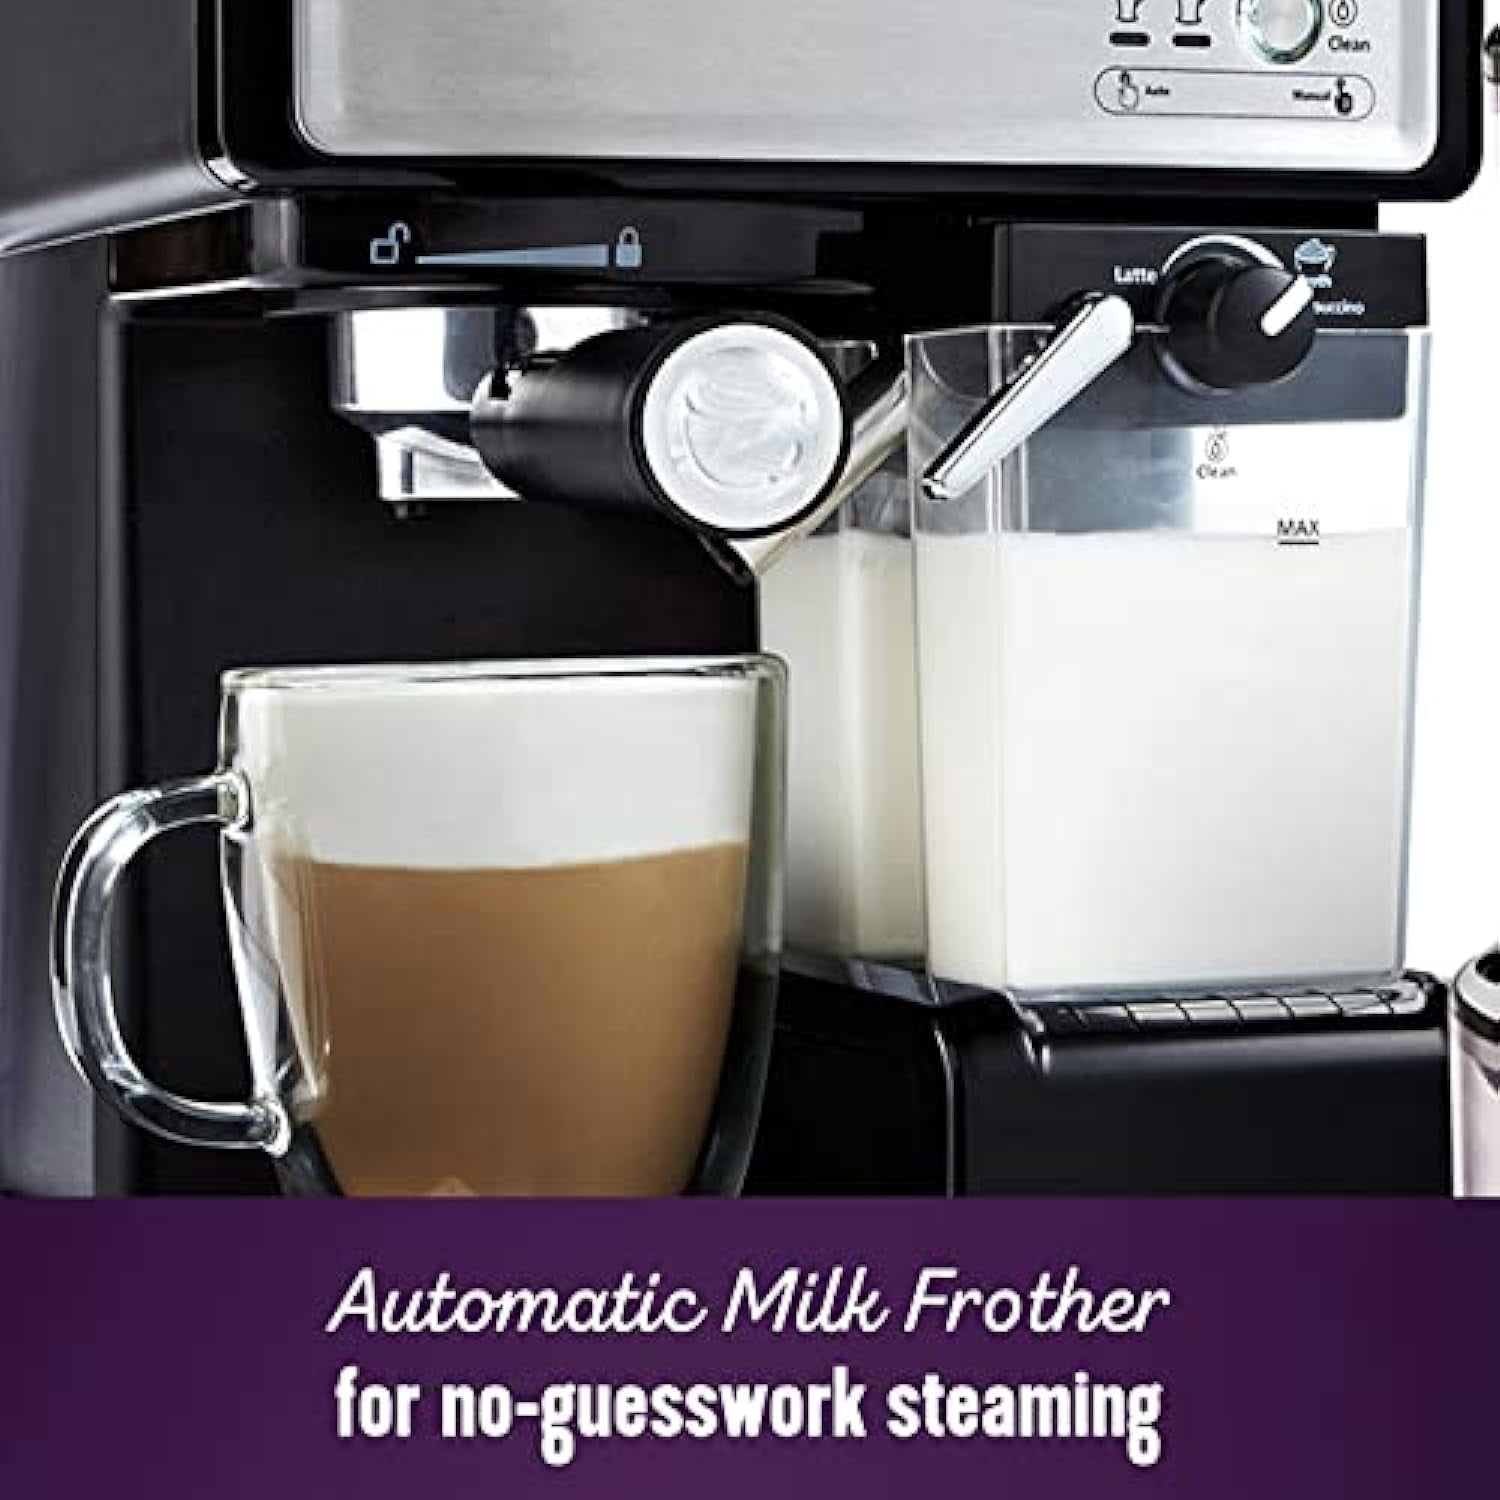 Mr. Coffee® Espresso Machines. - Cleaning your Espresso Maker 